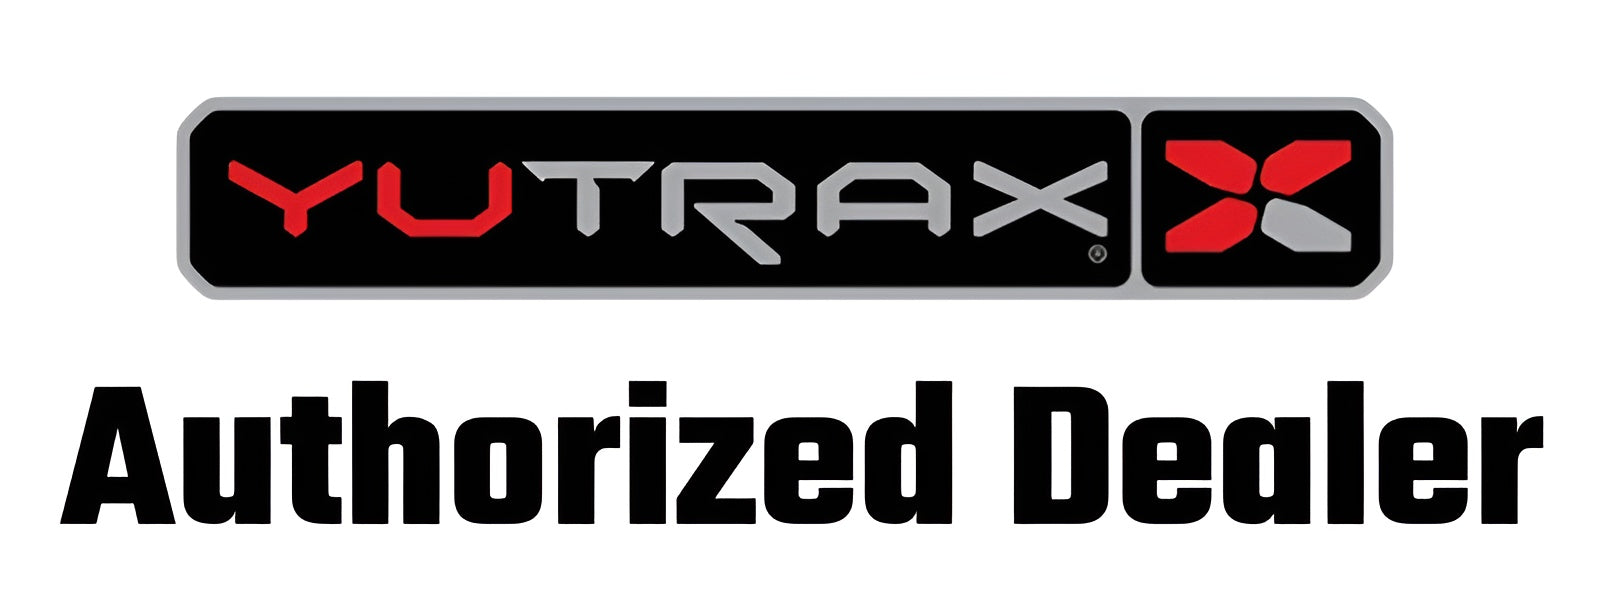 Yutrax Authorized Dealer Badge